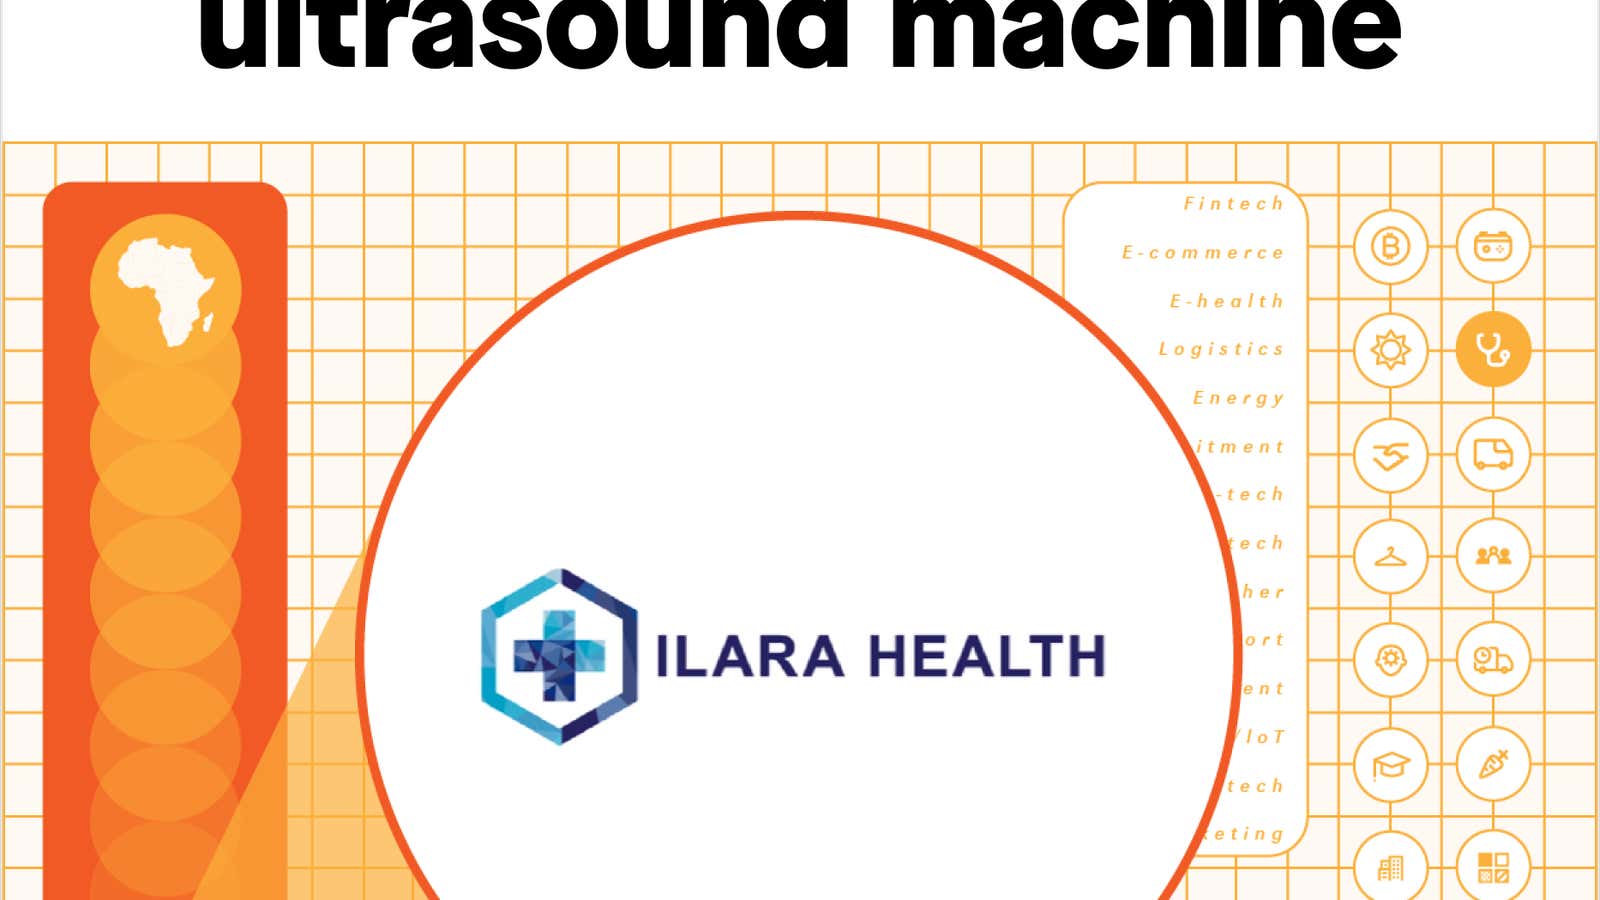 âœ¦ How to finance an ultrasound machine